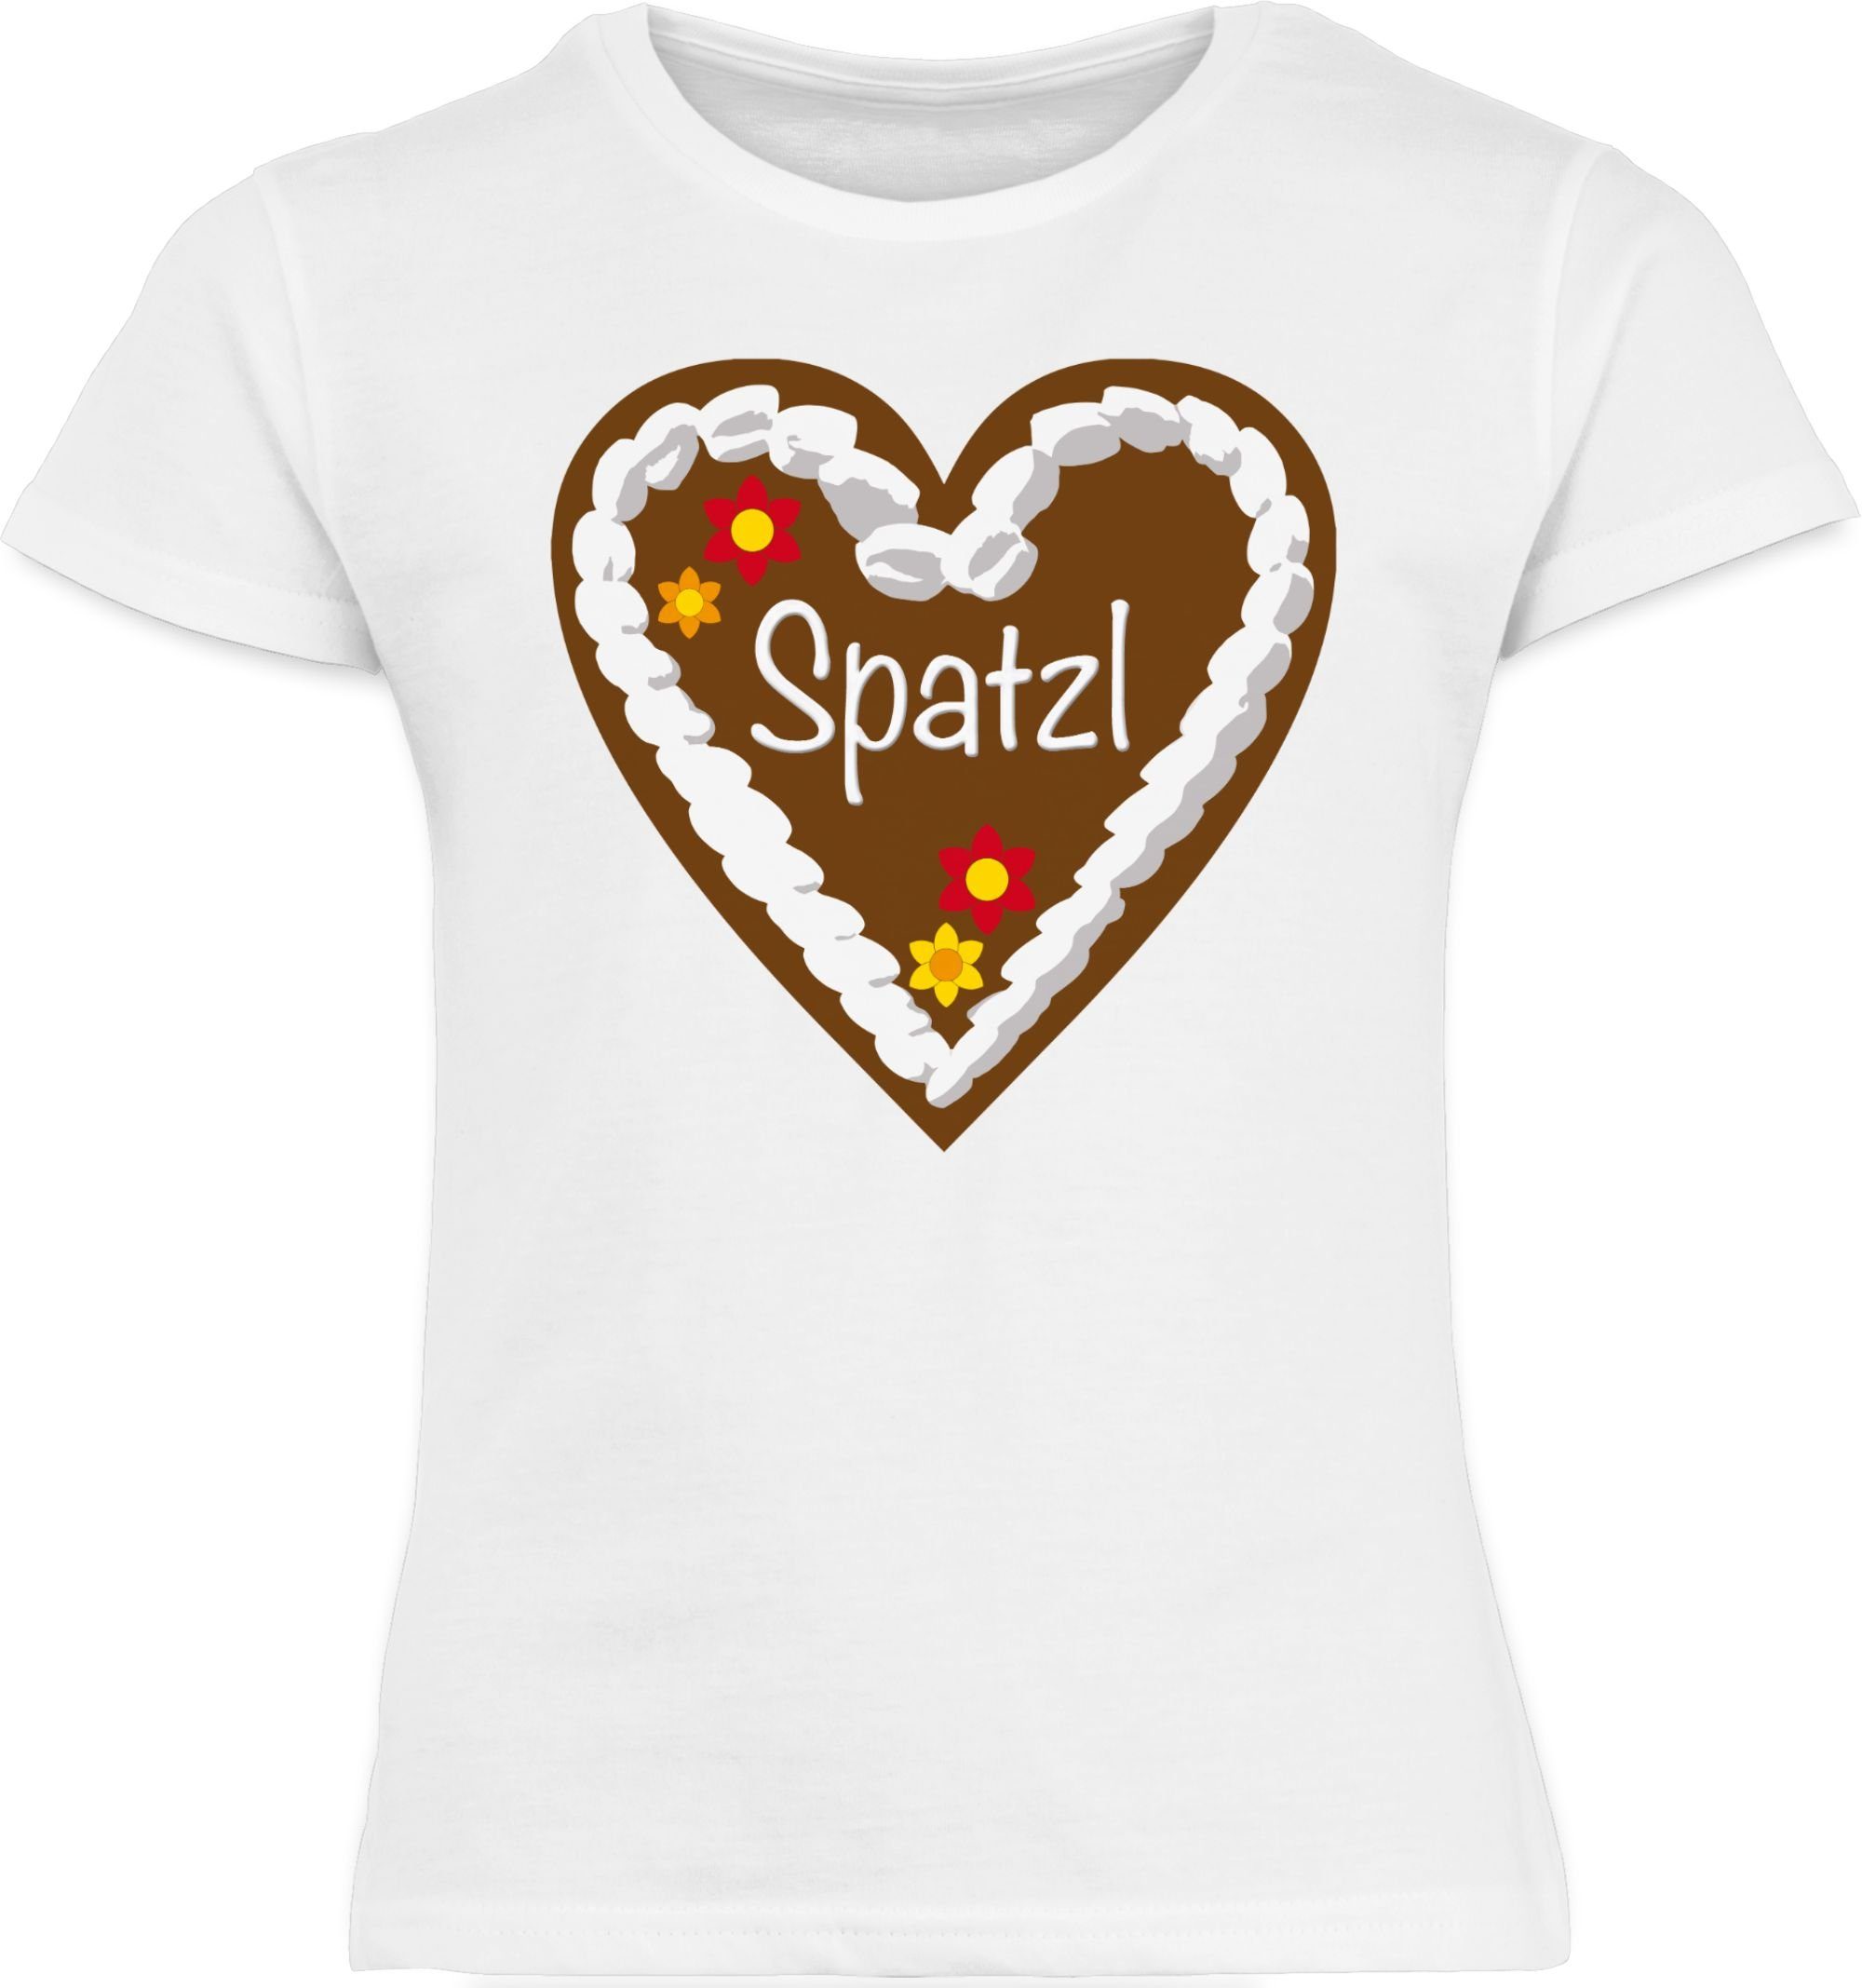 Mode Spatzl 1 Outfit Shirtracer Weiß Lebkuchenherz T-Shirt für Oktoberfest Kinder